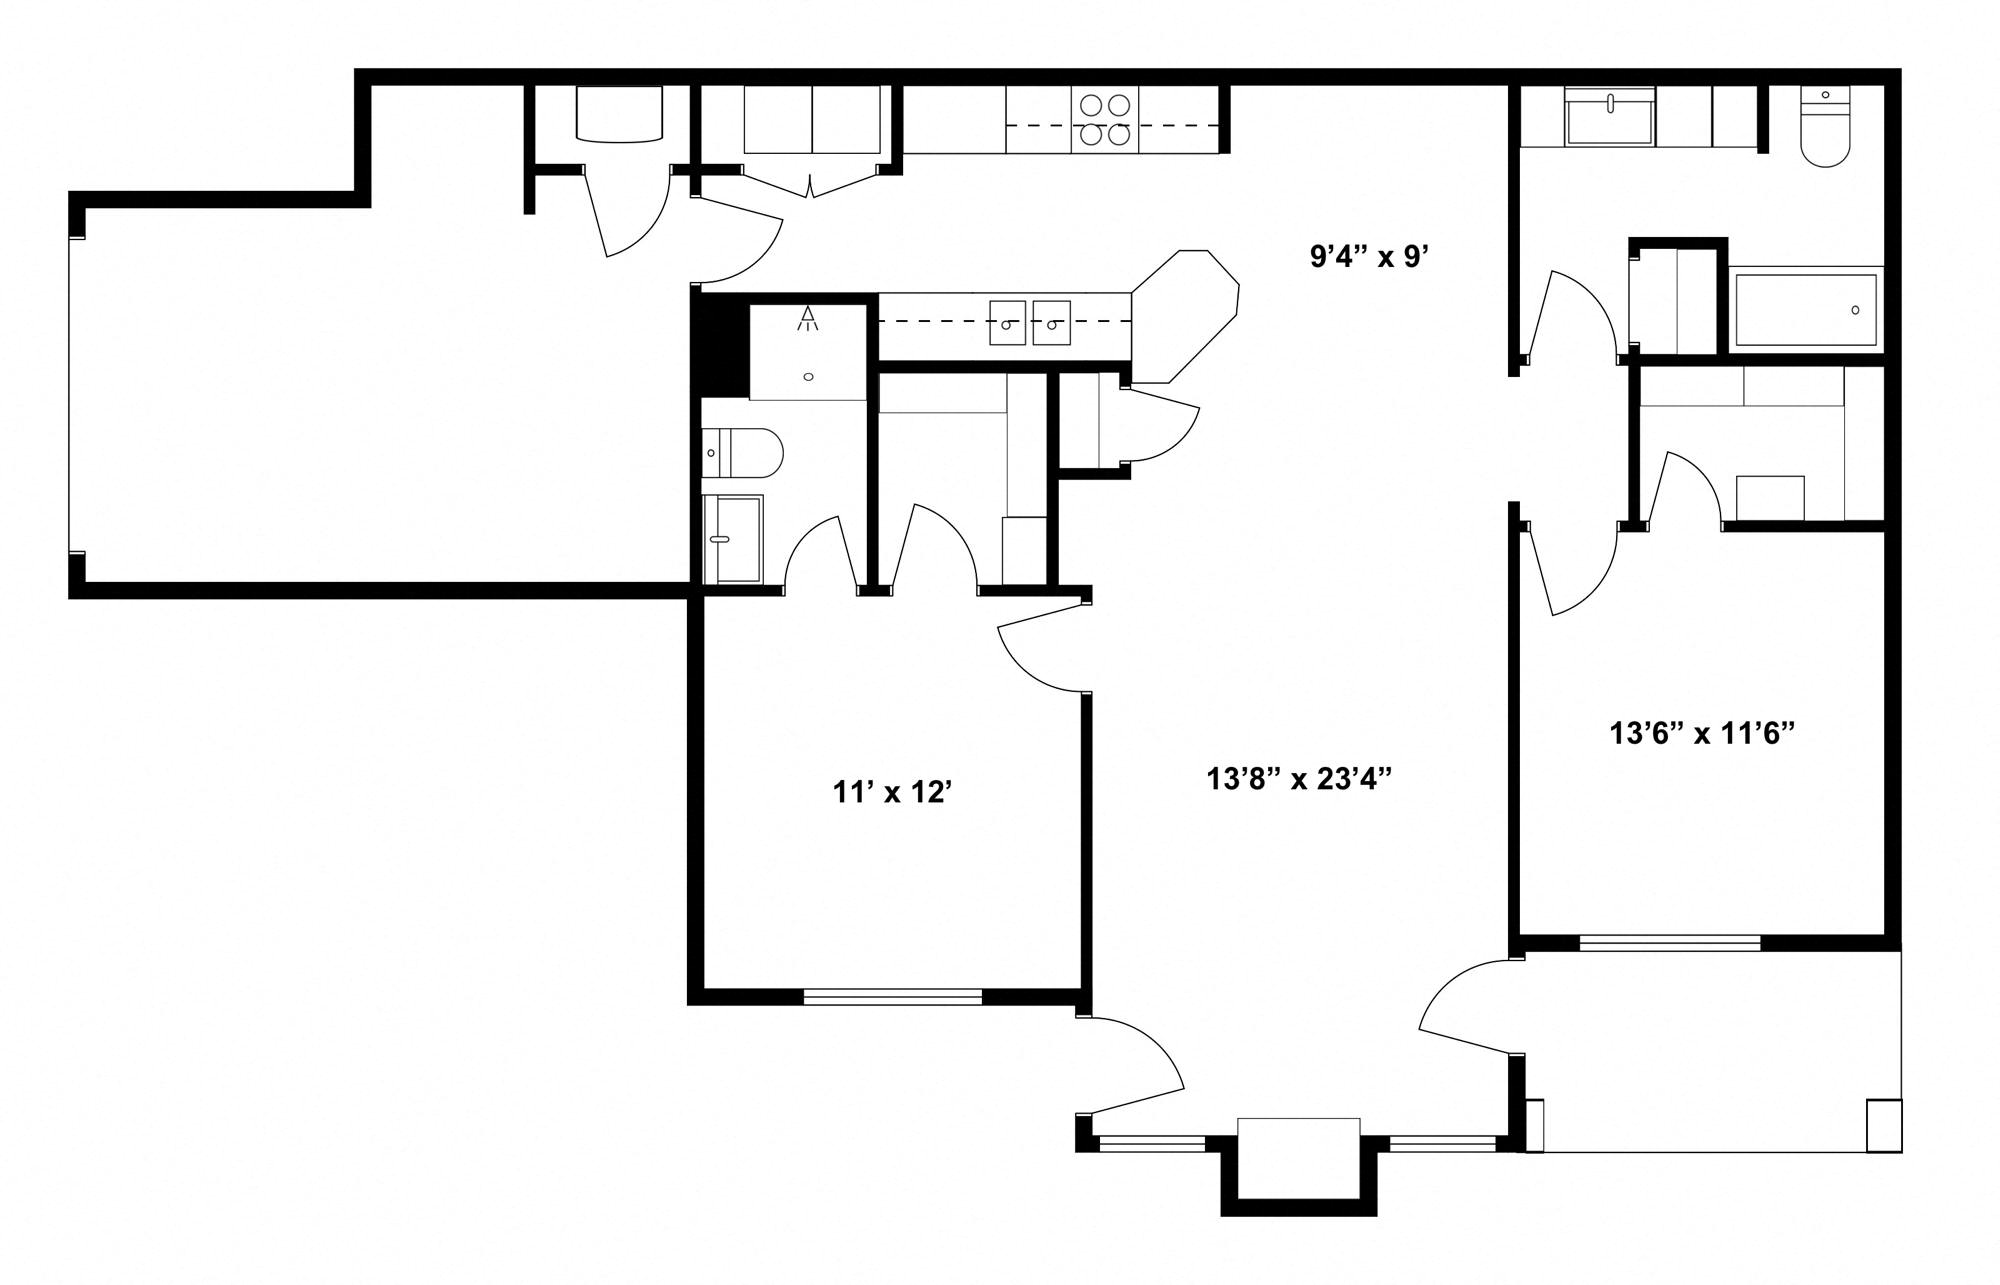 Grand Burgundy II Floor Plan